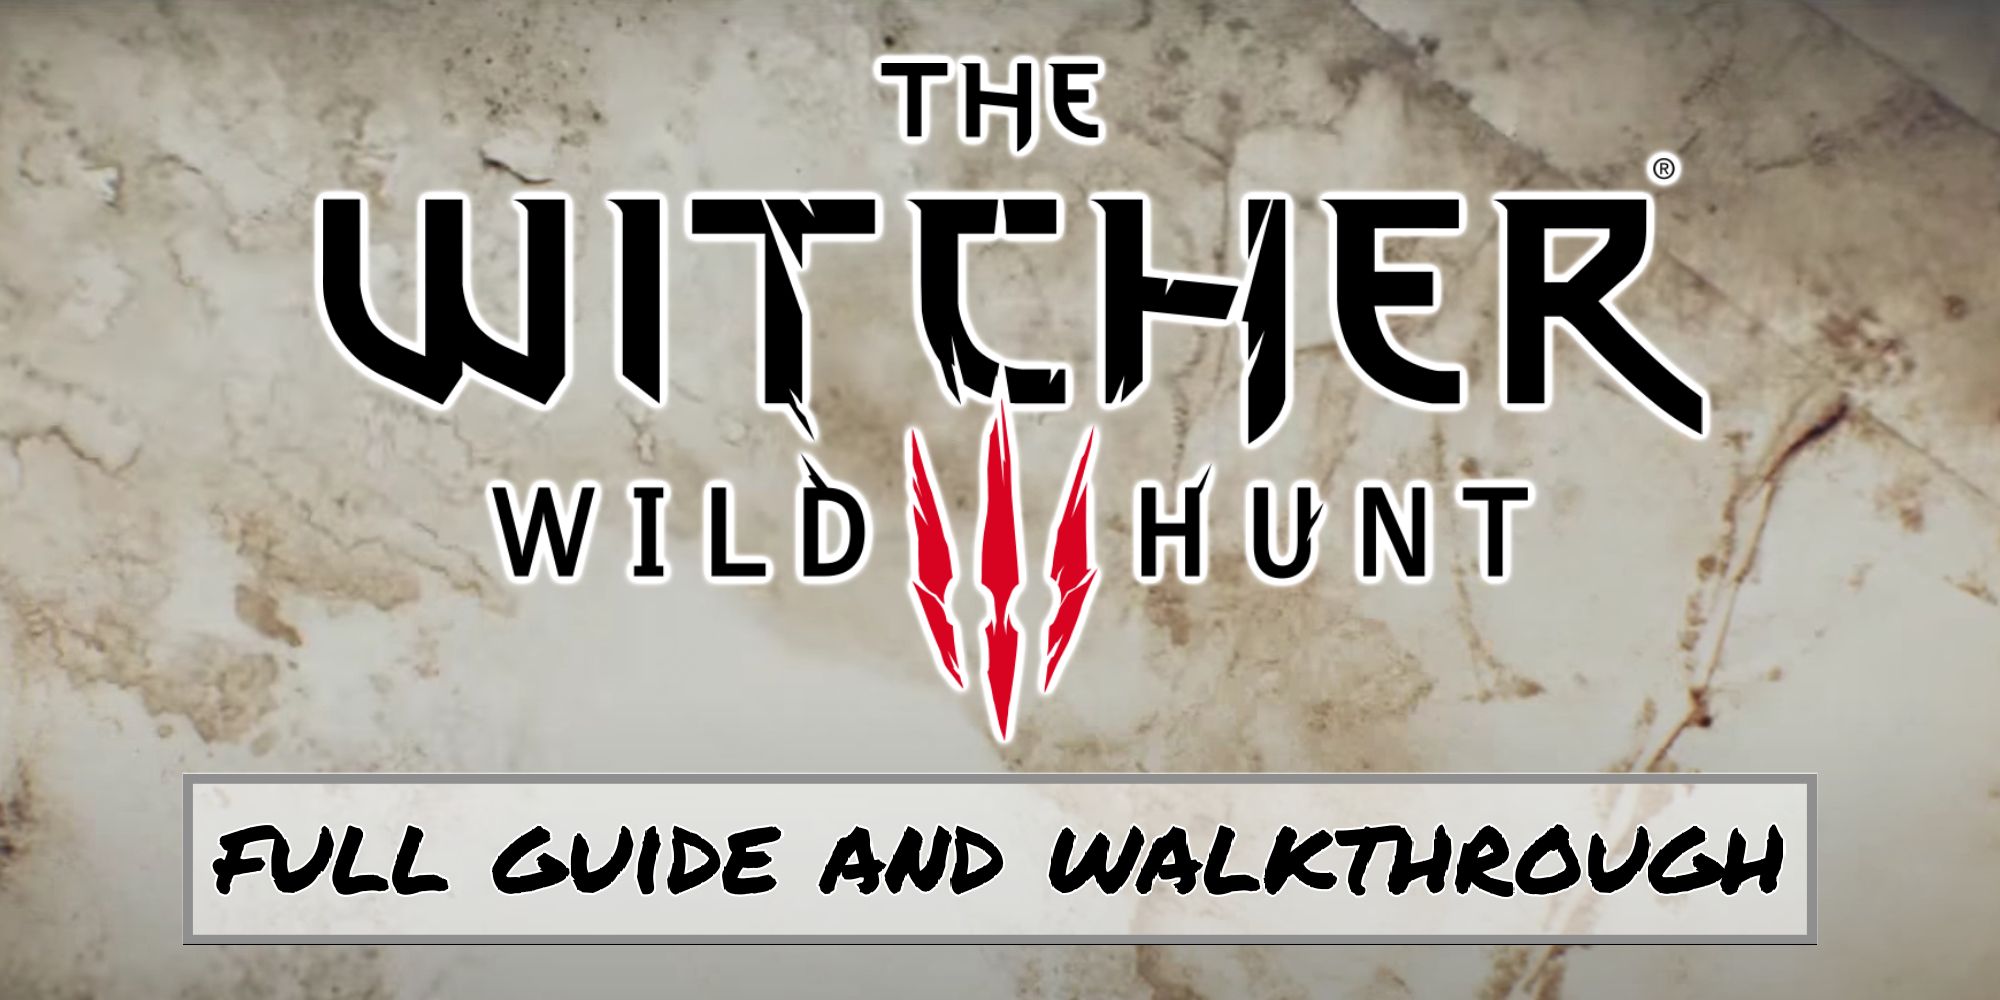 The Witcher 2 Mods List - Video Games, Walkthroughs, Guides, News, Tips,  Cheats